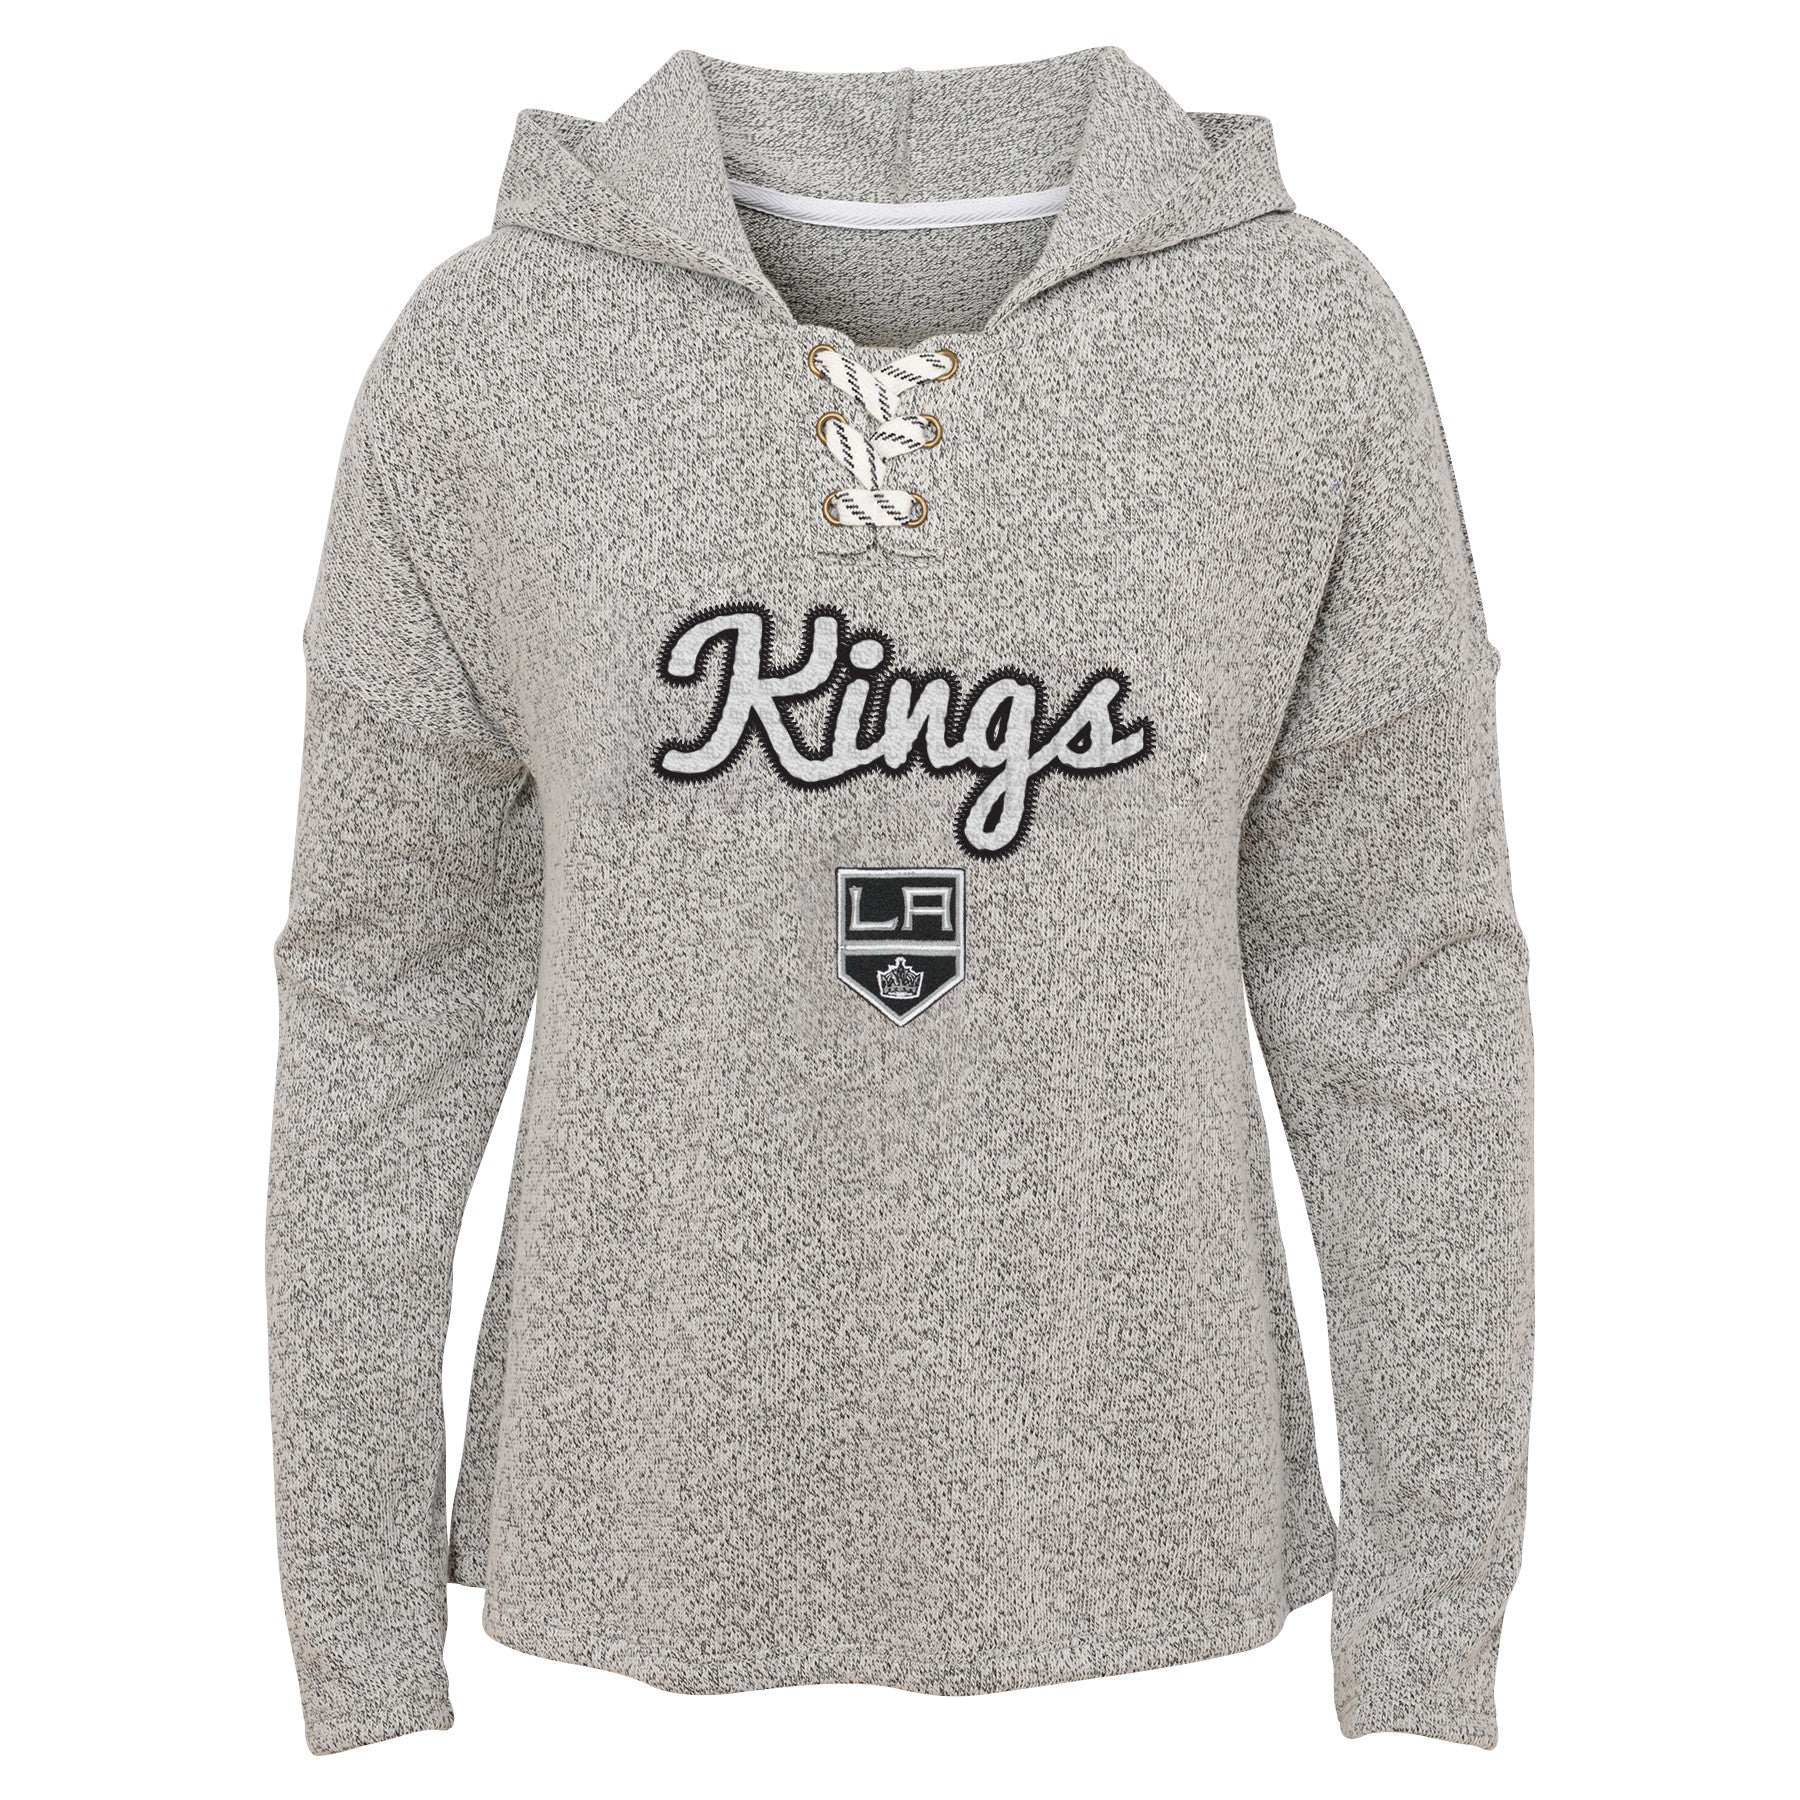 Los Angeles Kings Hoodie Mens Medium Black Gray NHL Hockey LA Kings Sweater  -EUC